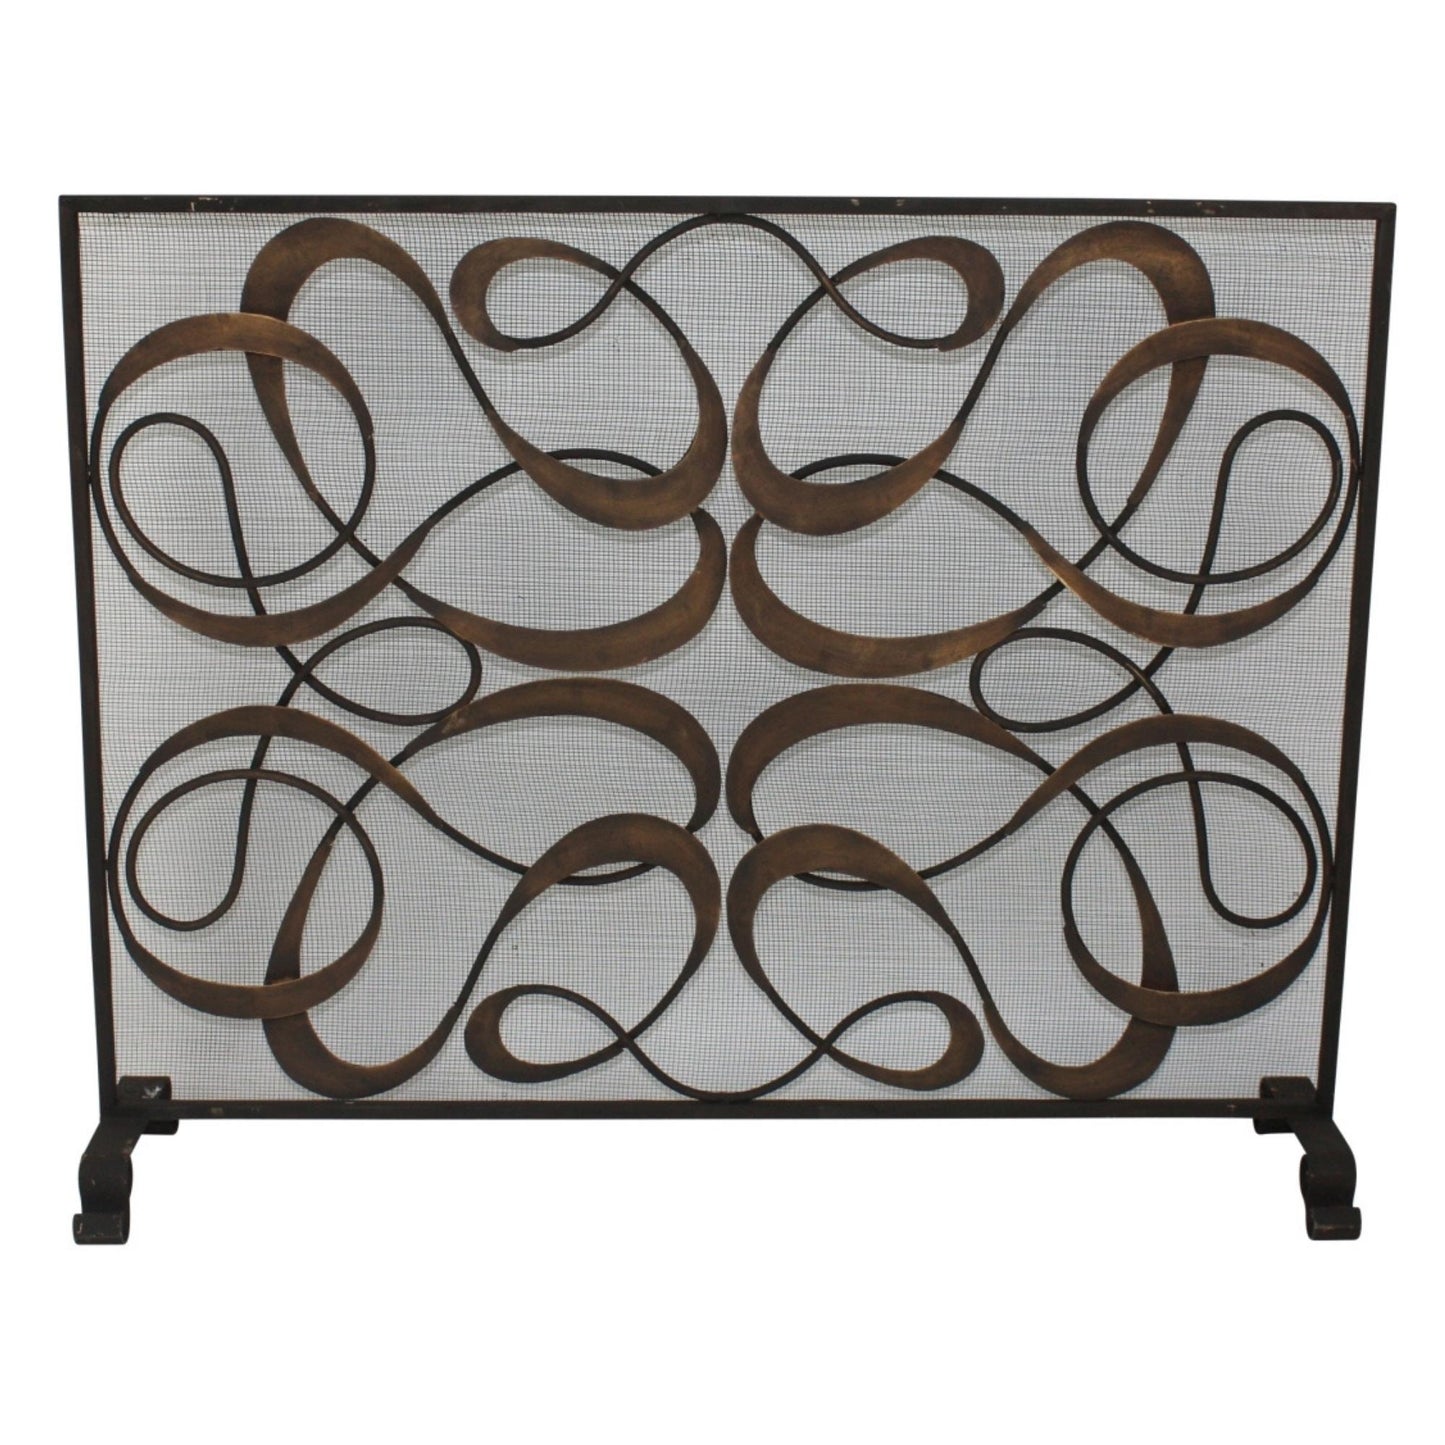 Single Panel Iron Fire Screen - Dark Gold Fireplace Screen with Swirl Design | InsideOutCatalog.com